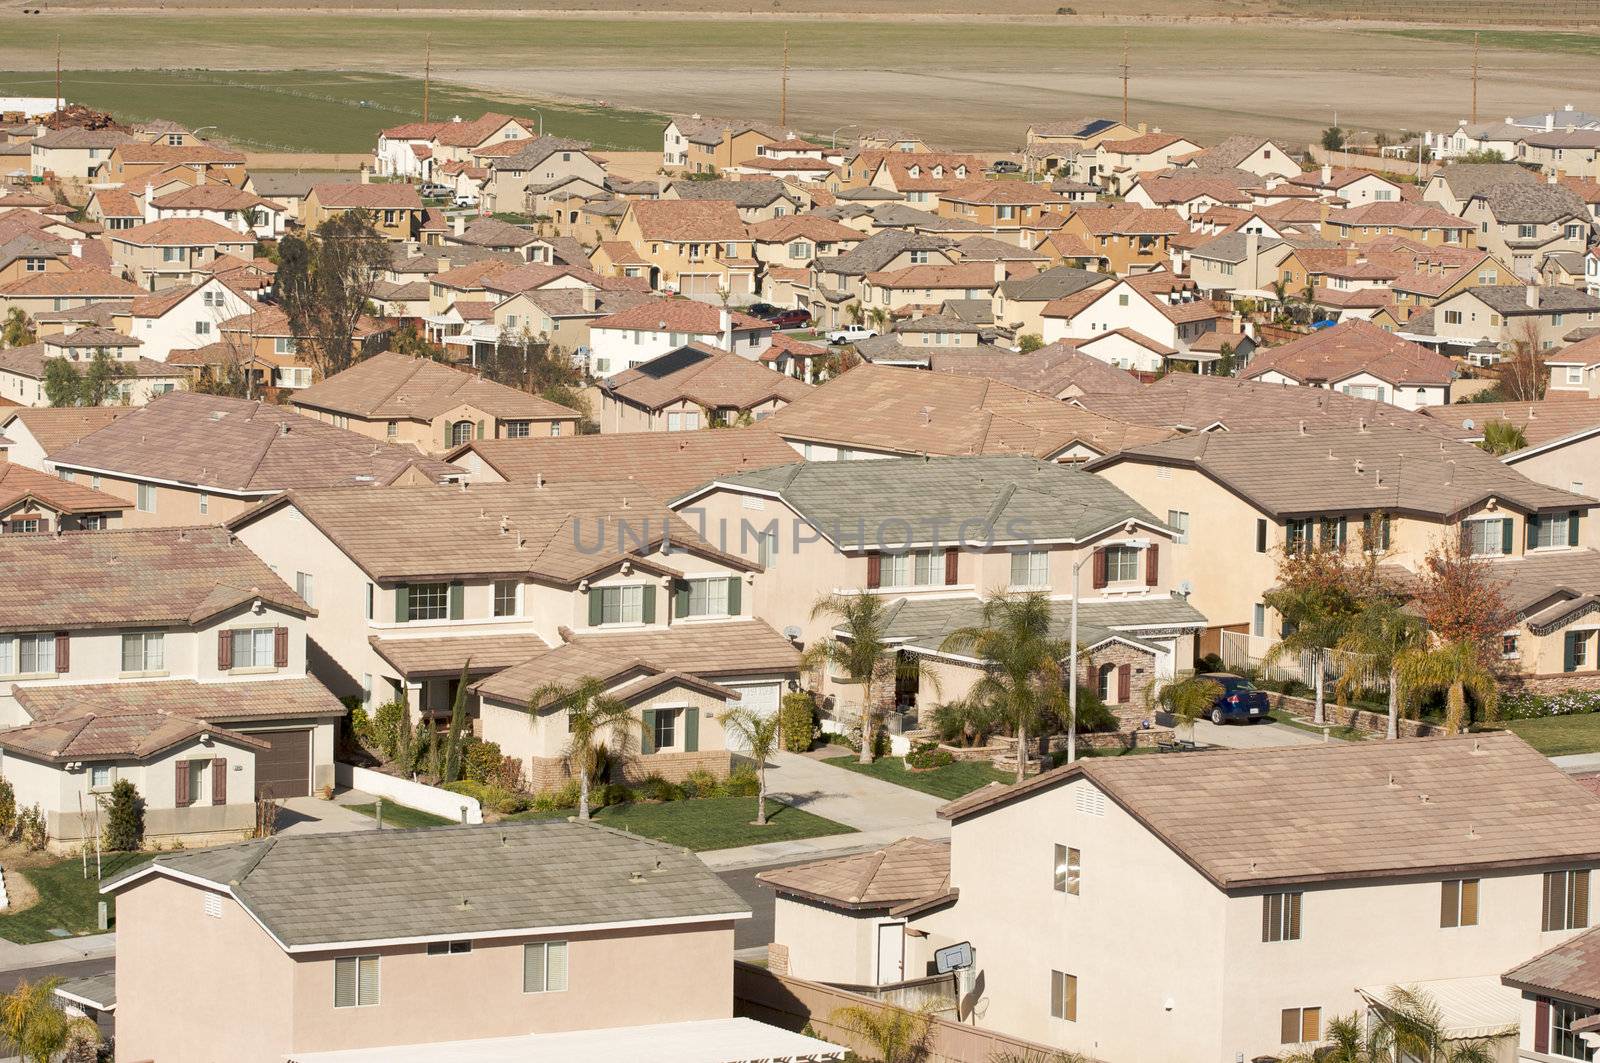 Elevated View of New Contemporary Suburban Neighborhood.